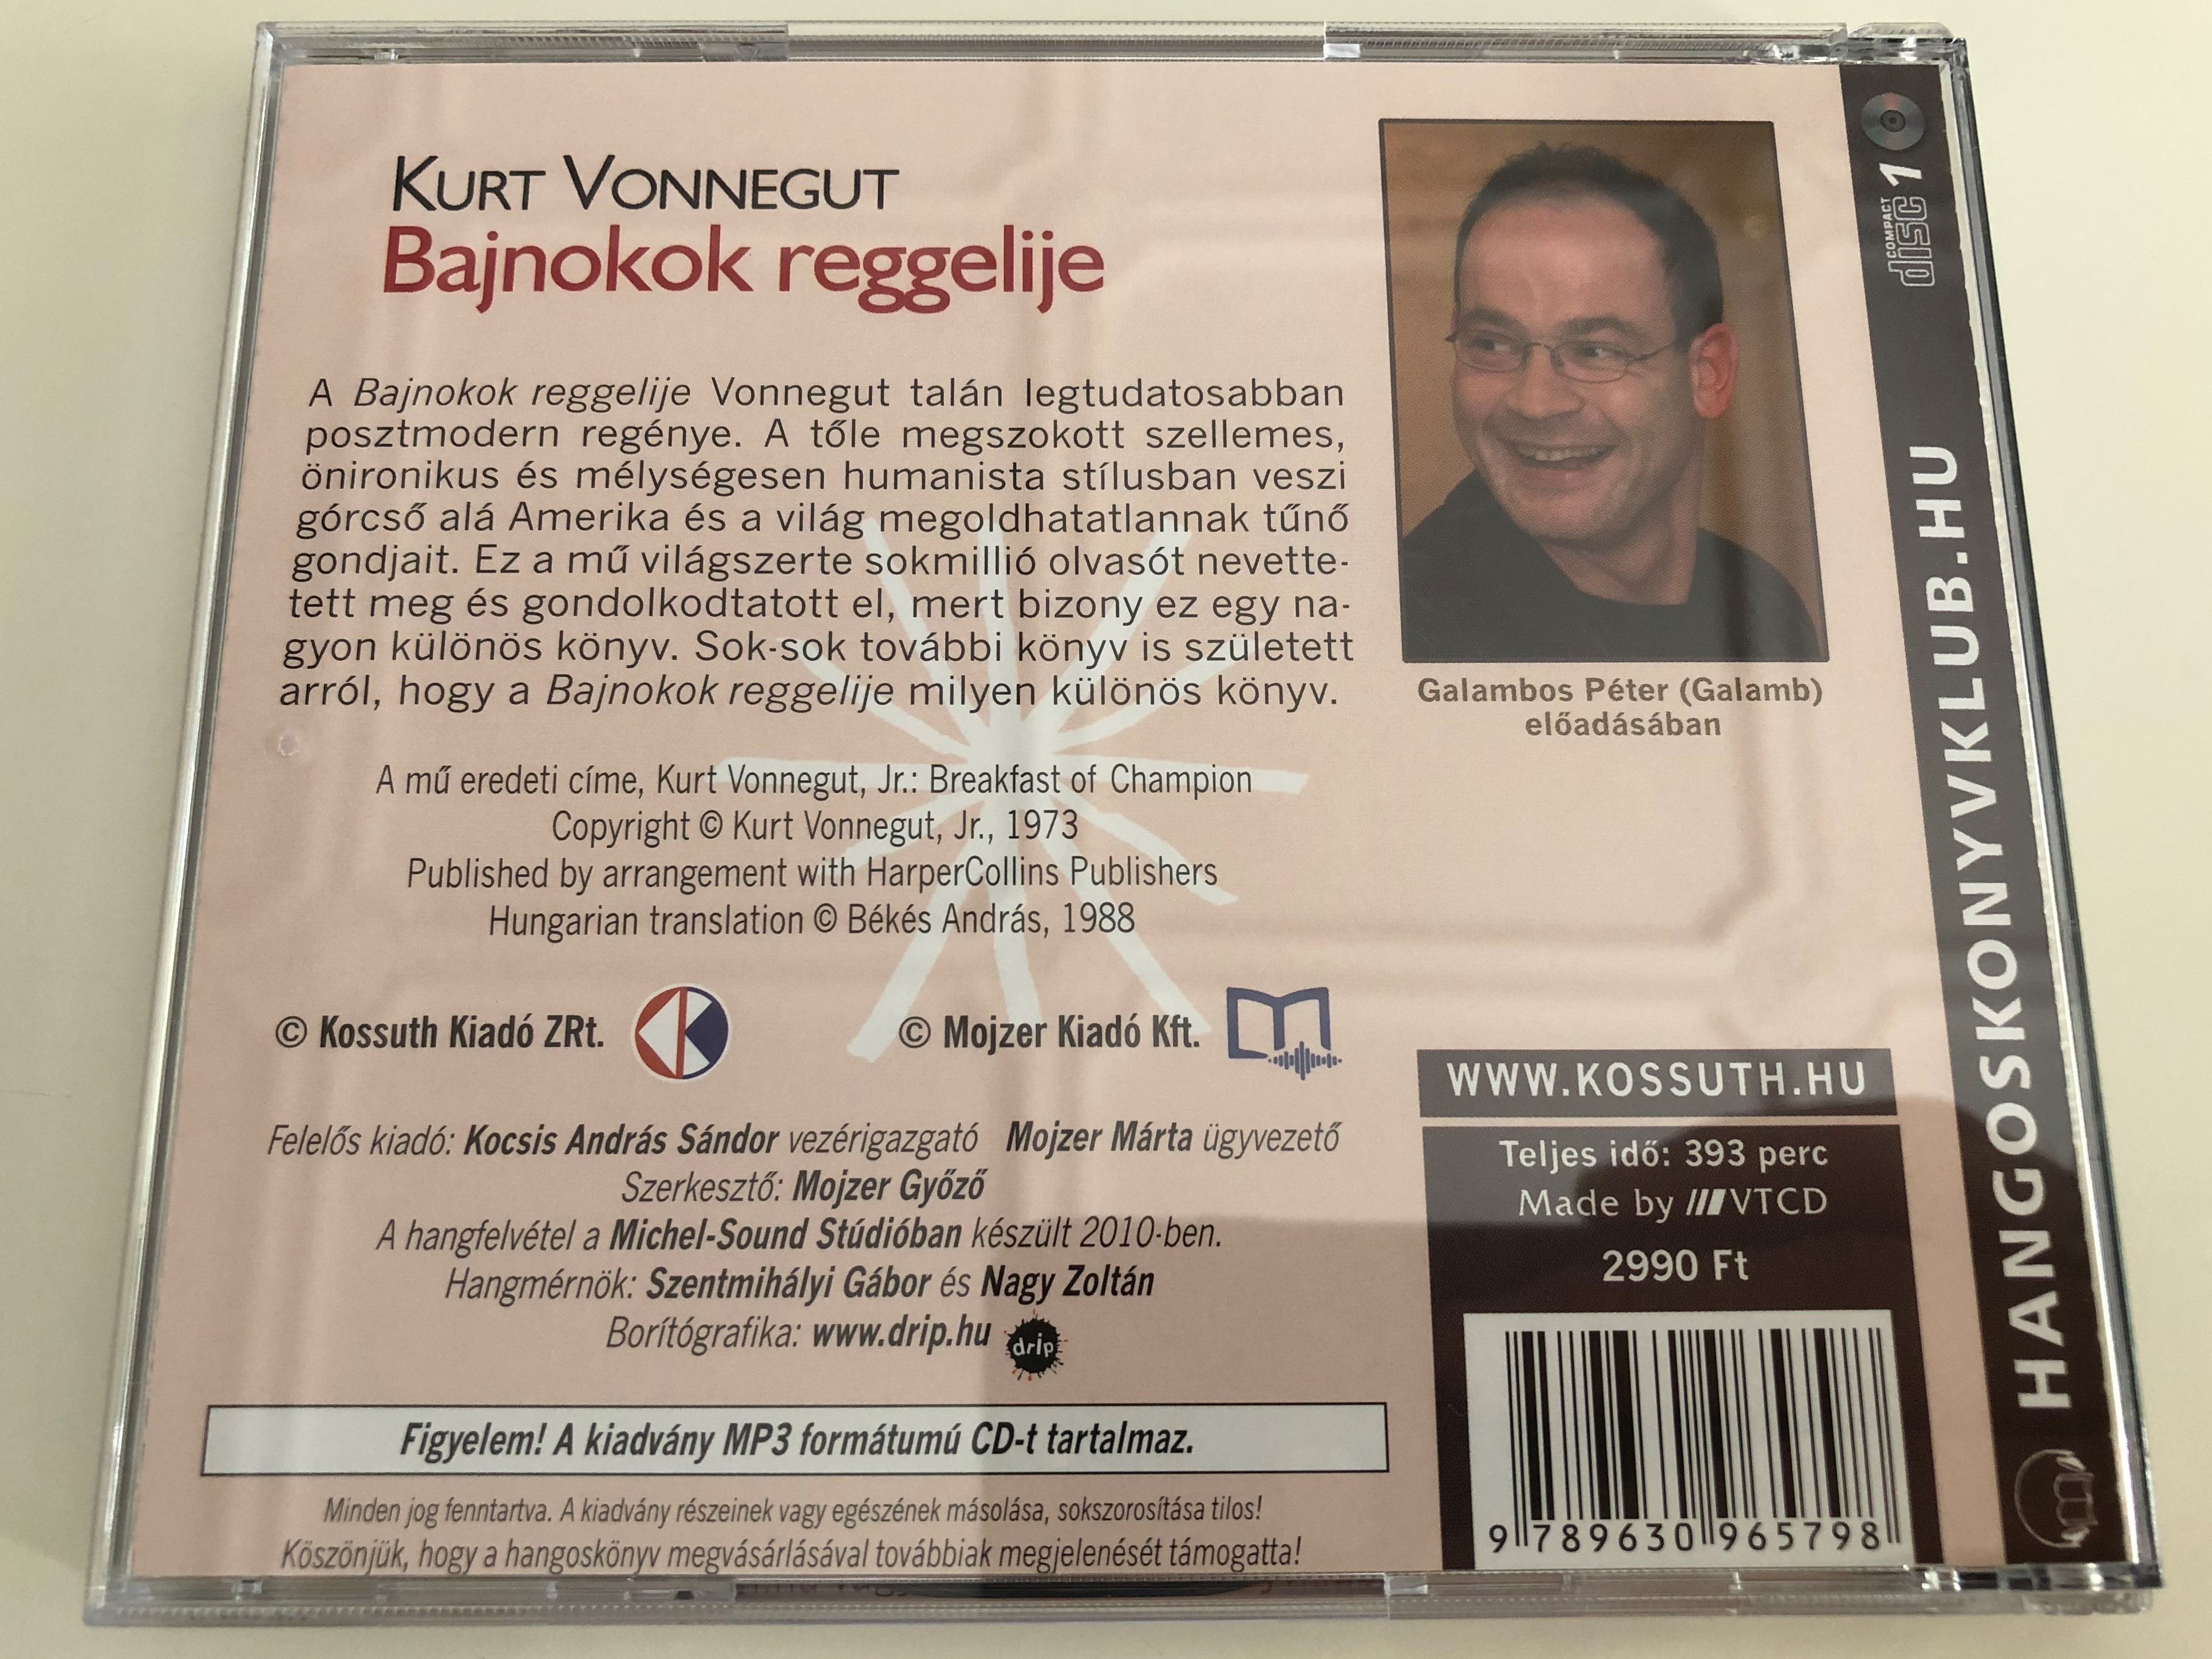 bajnokok-reggelije-by-kurt-vonnegut-hungarian-audio-book-of-breakfast-of-champion-translated-by-b-k-s-andr-s-read-by-galambos-p-ter-galamb-kossuth-mojzer-audio-cd-2010-3-.jpg